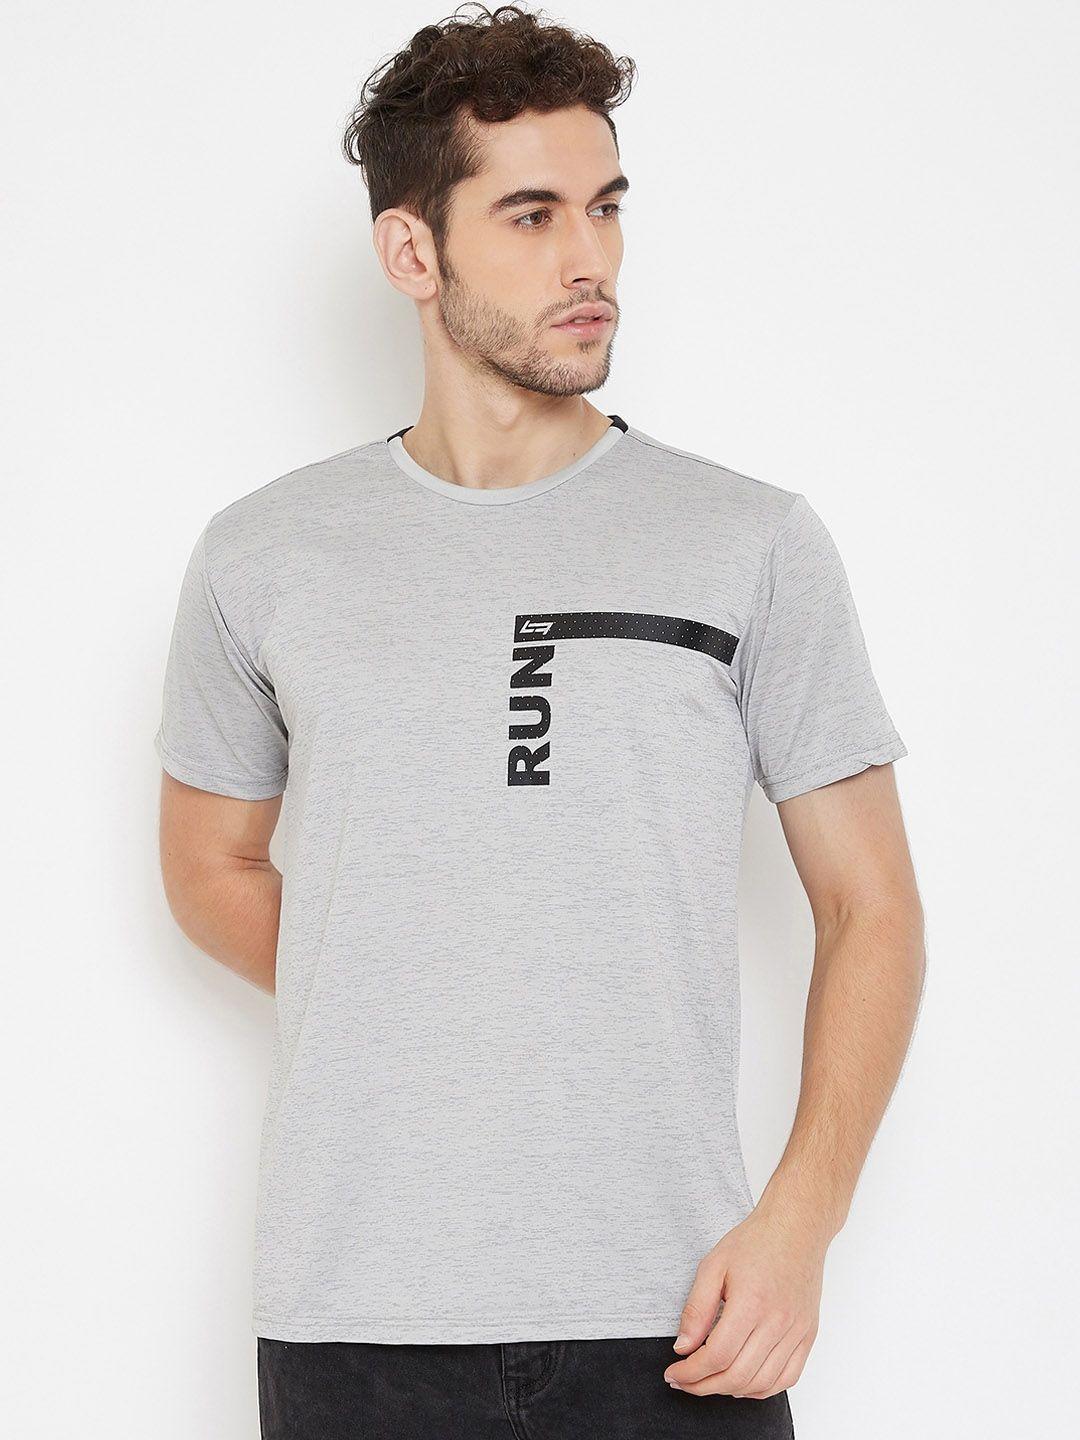 neva men grey & black printed round neck t-shirt